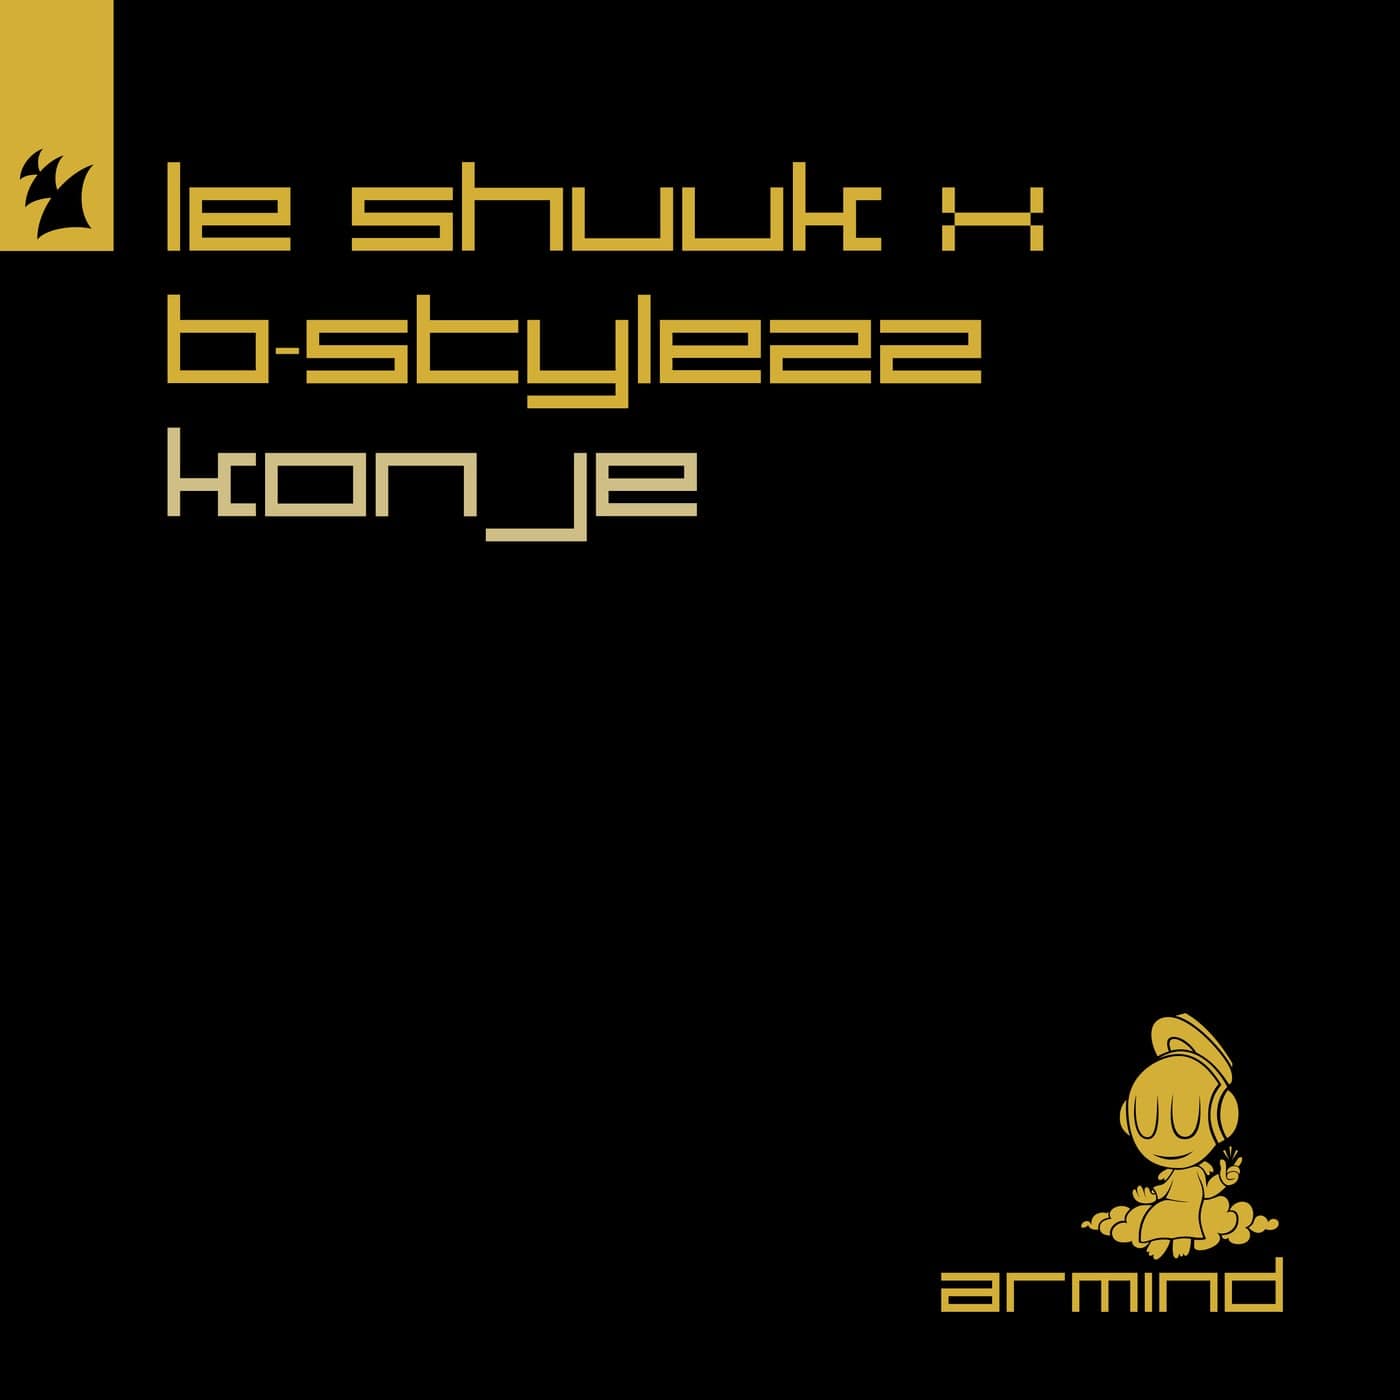 image cover: Le Shuuk, B-Stylezz - Konje / Trance (Main Floor)